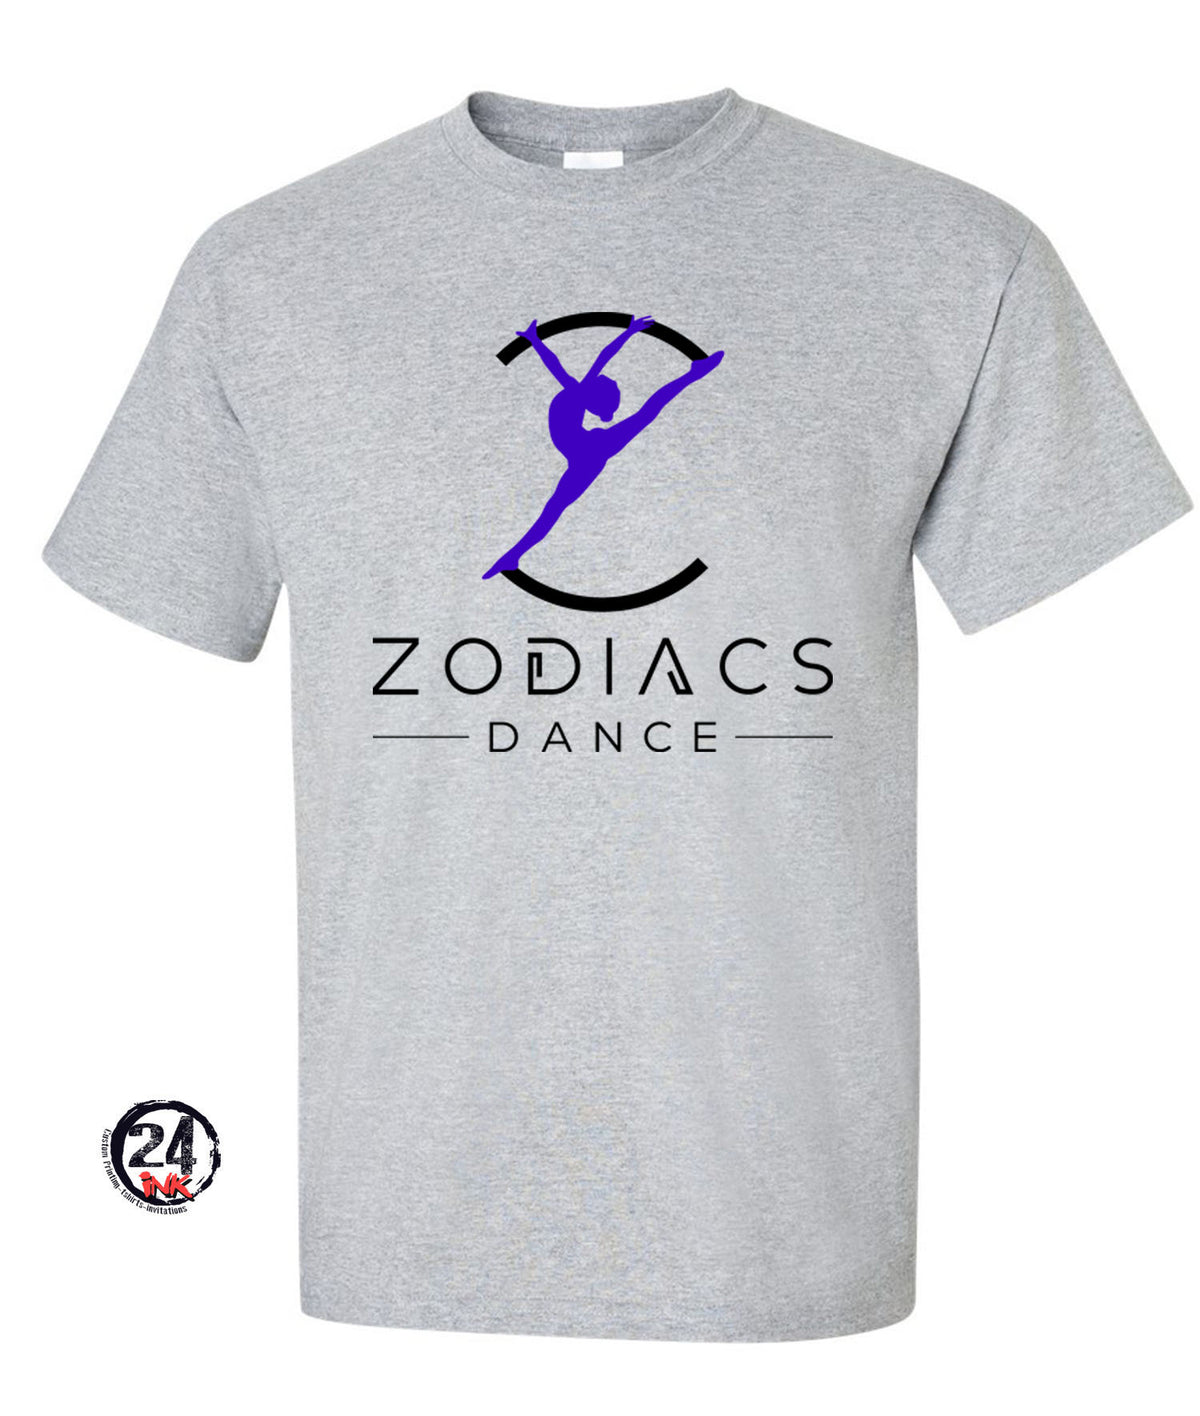 Zodiac Dance T-shirt heather gray